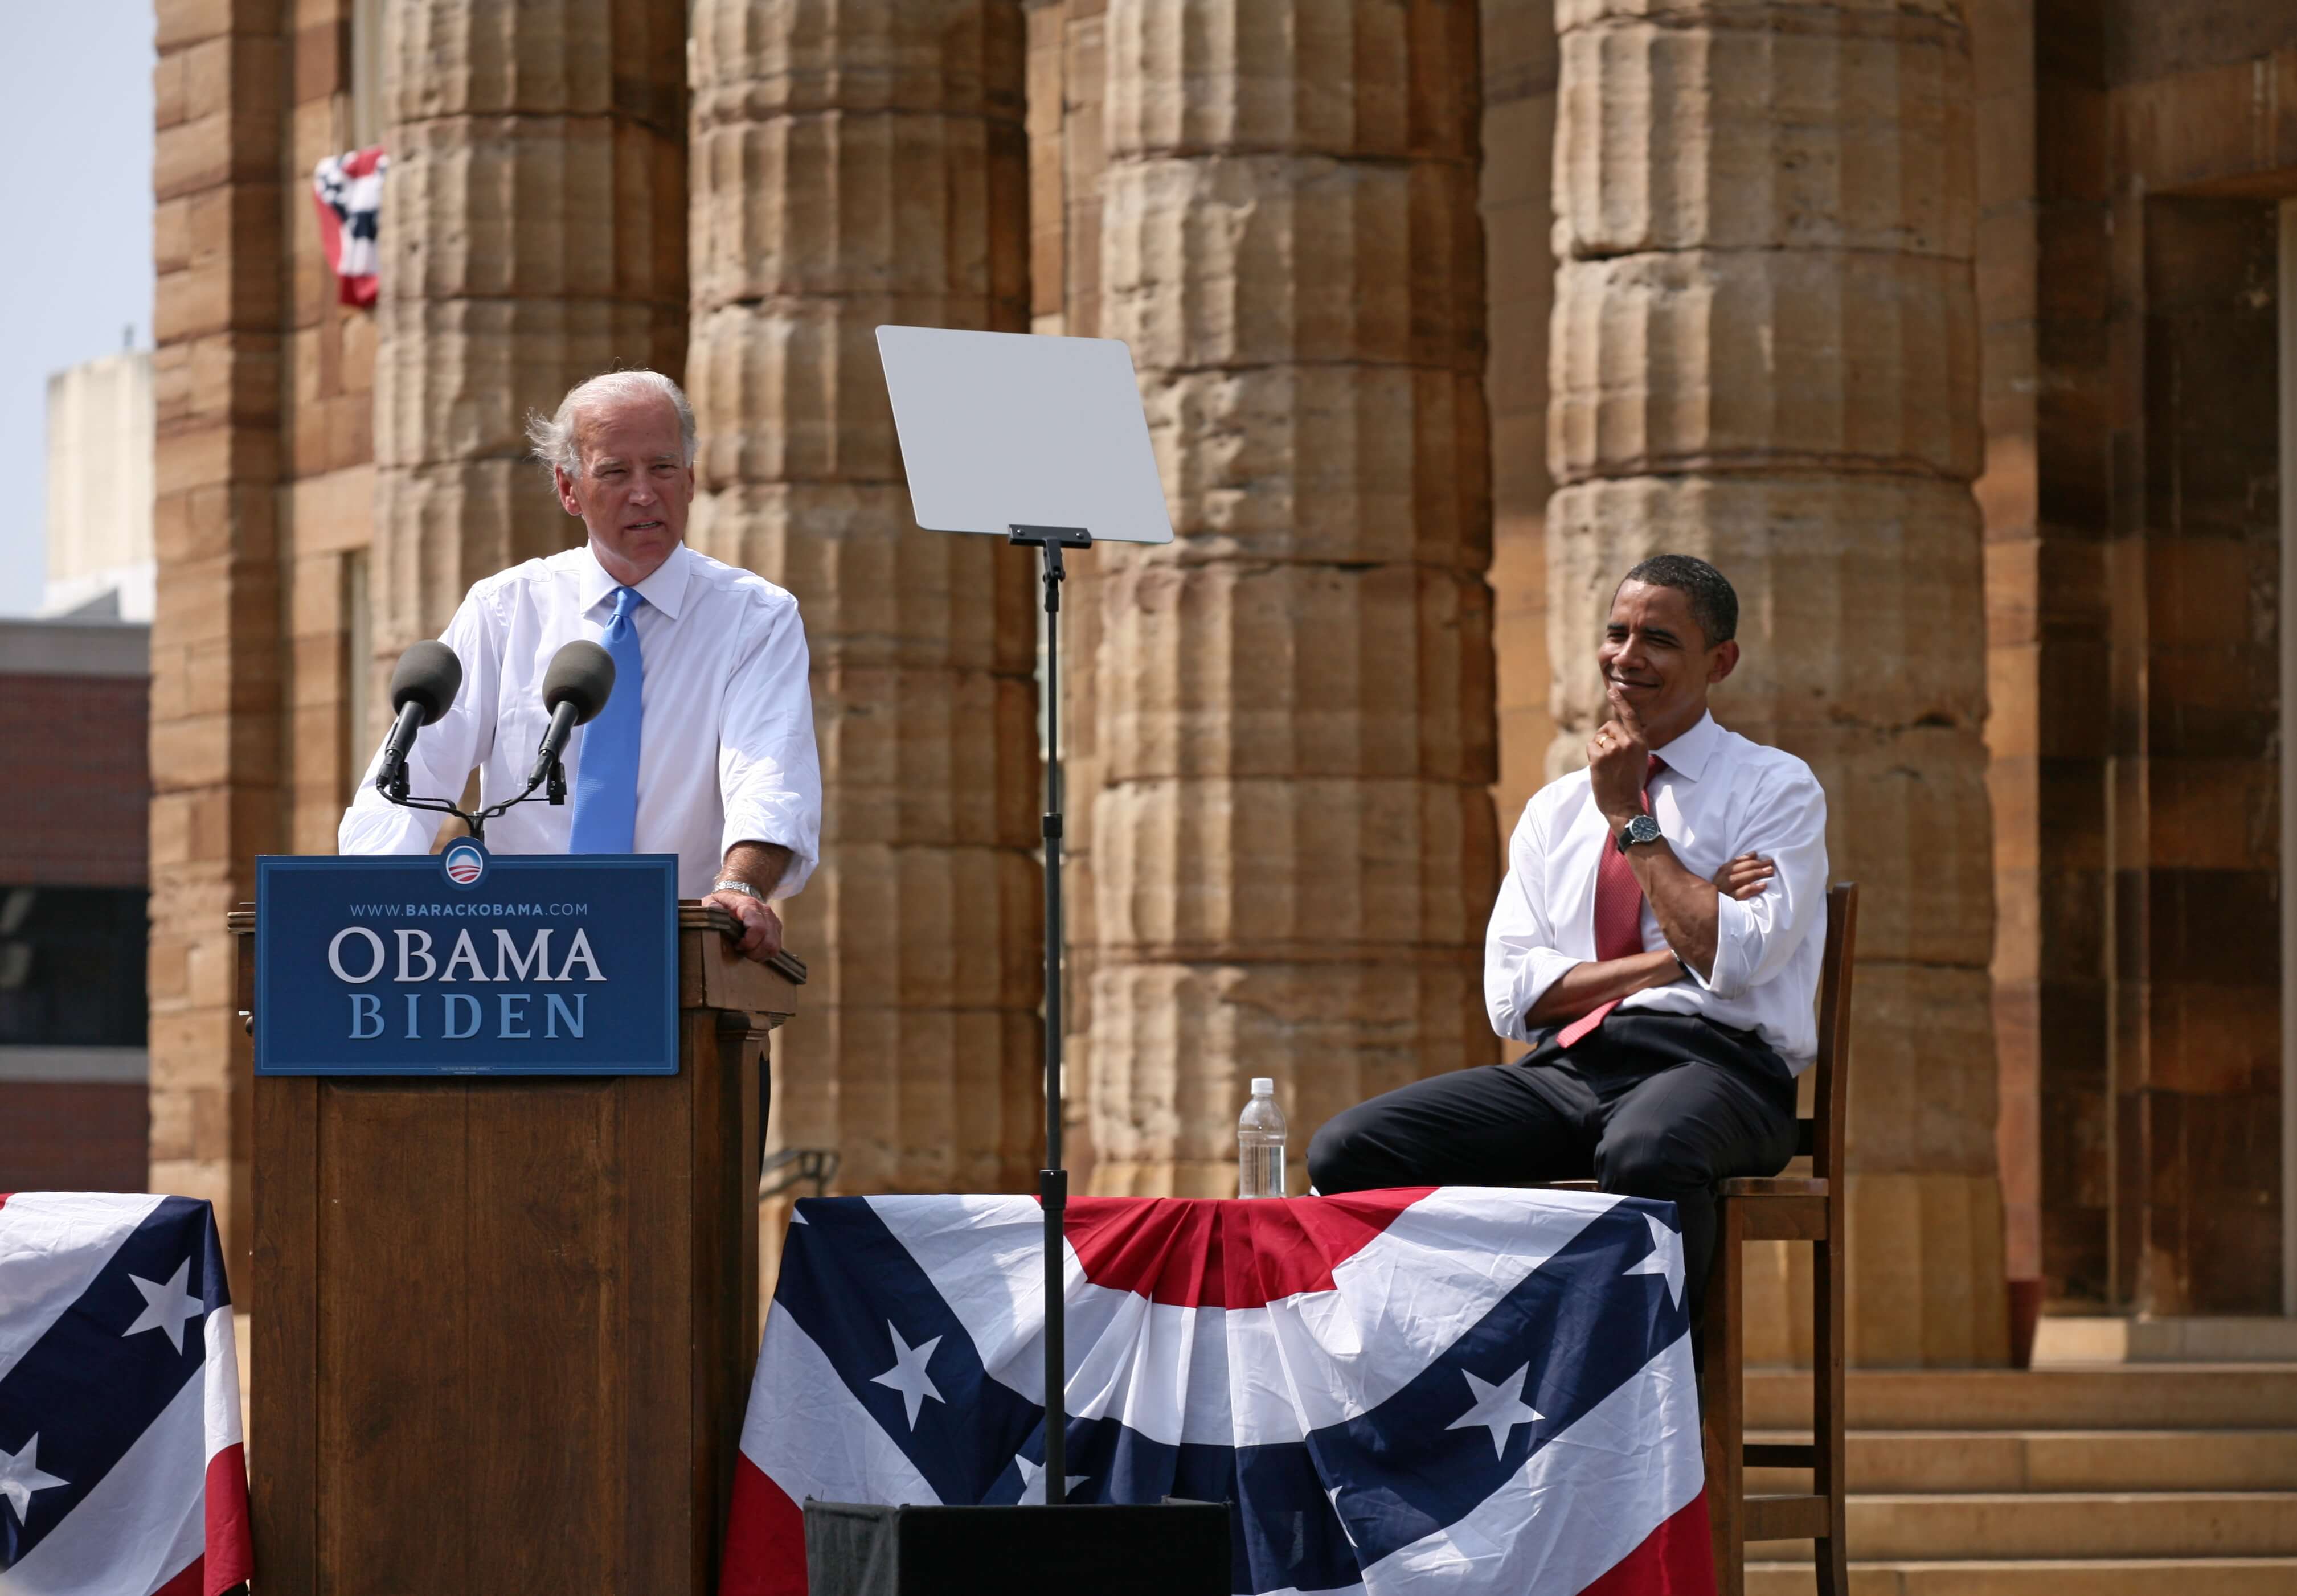 Janssens - Joe Biden in 2013 met Barack Obama bij de 'vice presidential announcement' bij de Old State Capitol in Springfield, Illinois. By Daniel Schwen - Own work, CC BY-SA 4.0